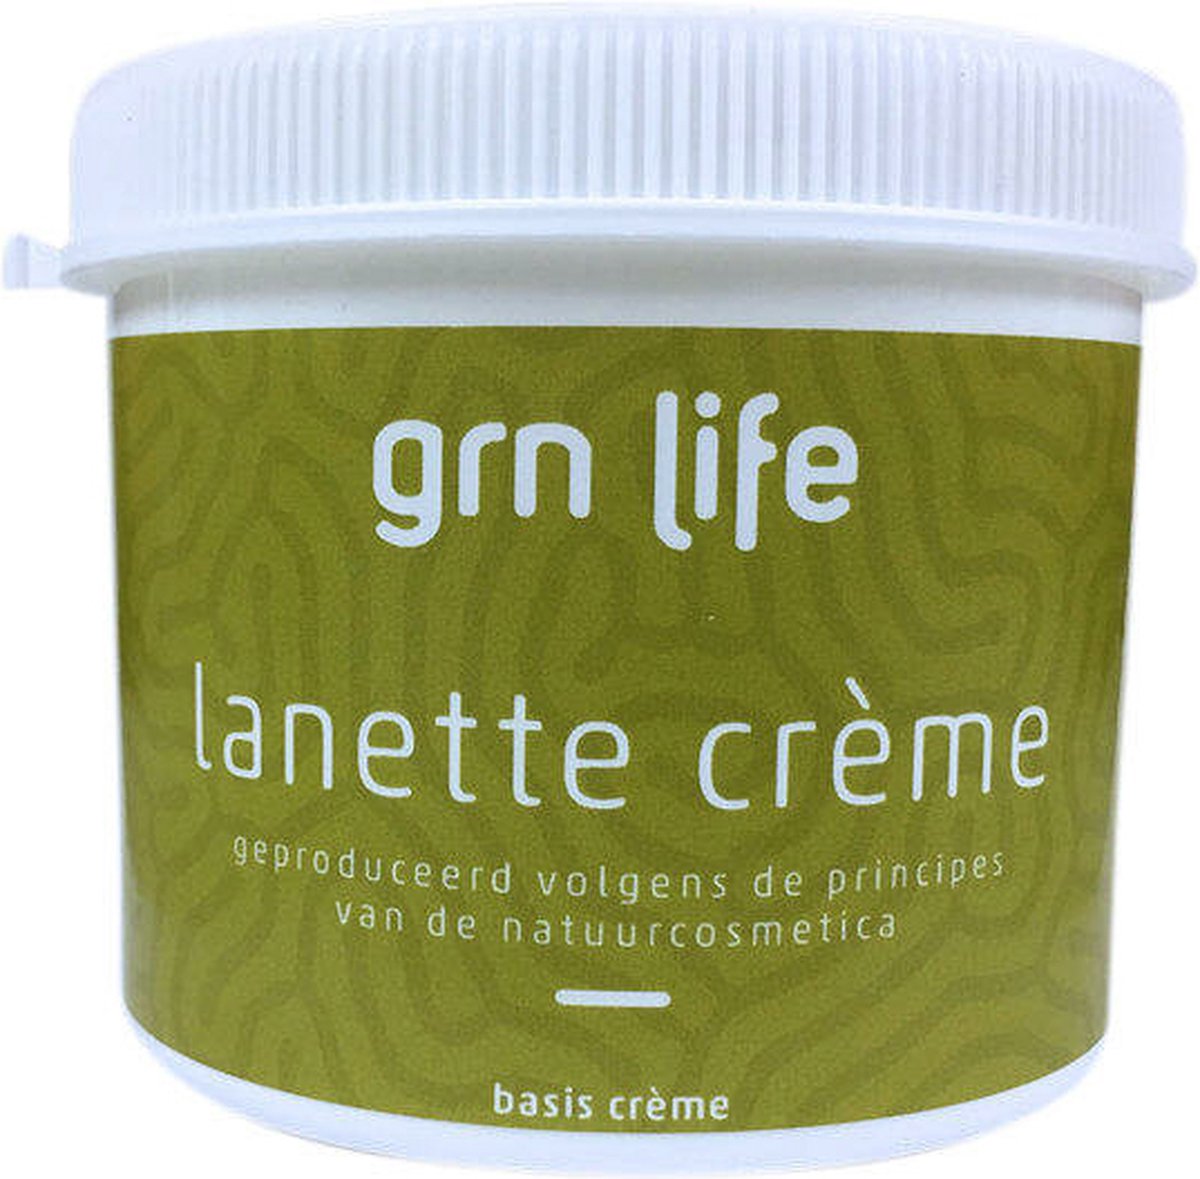 Lanette Crème volgens Natuurcosmeticaprincipes geproduceerd